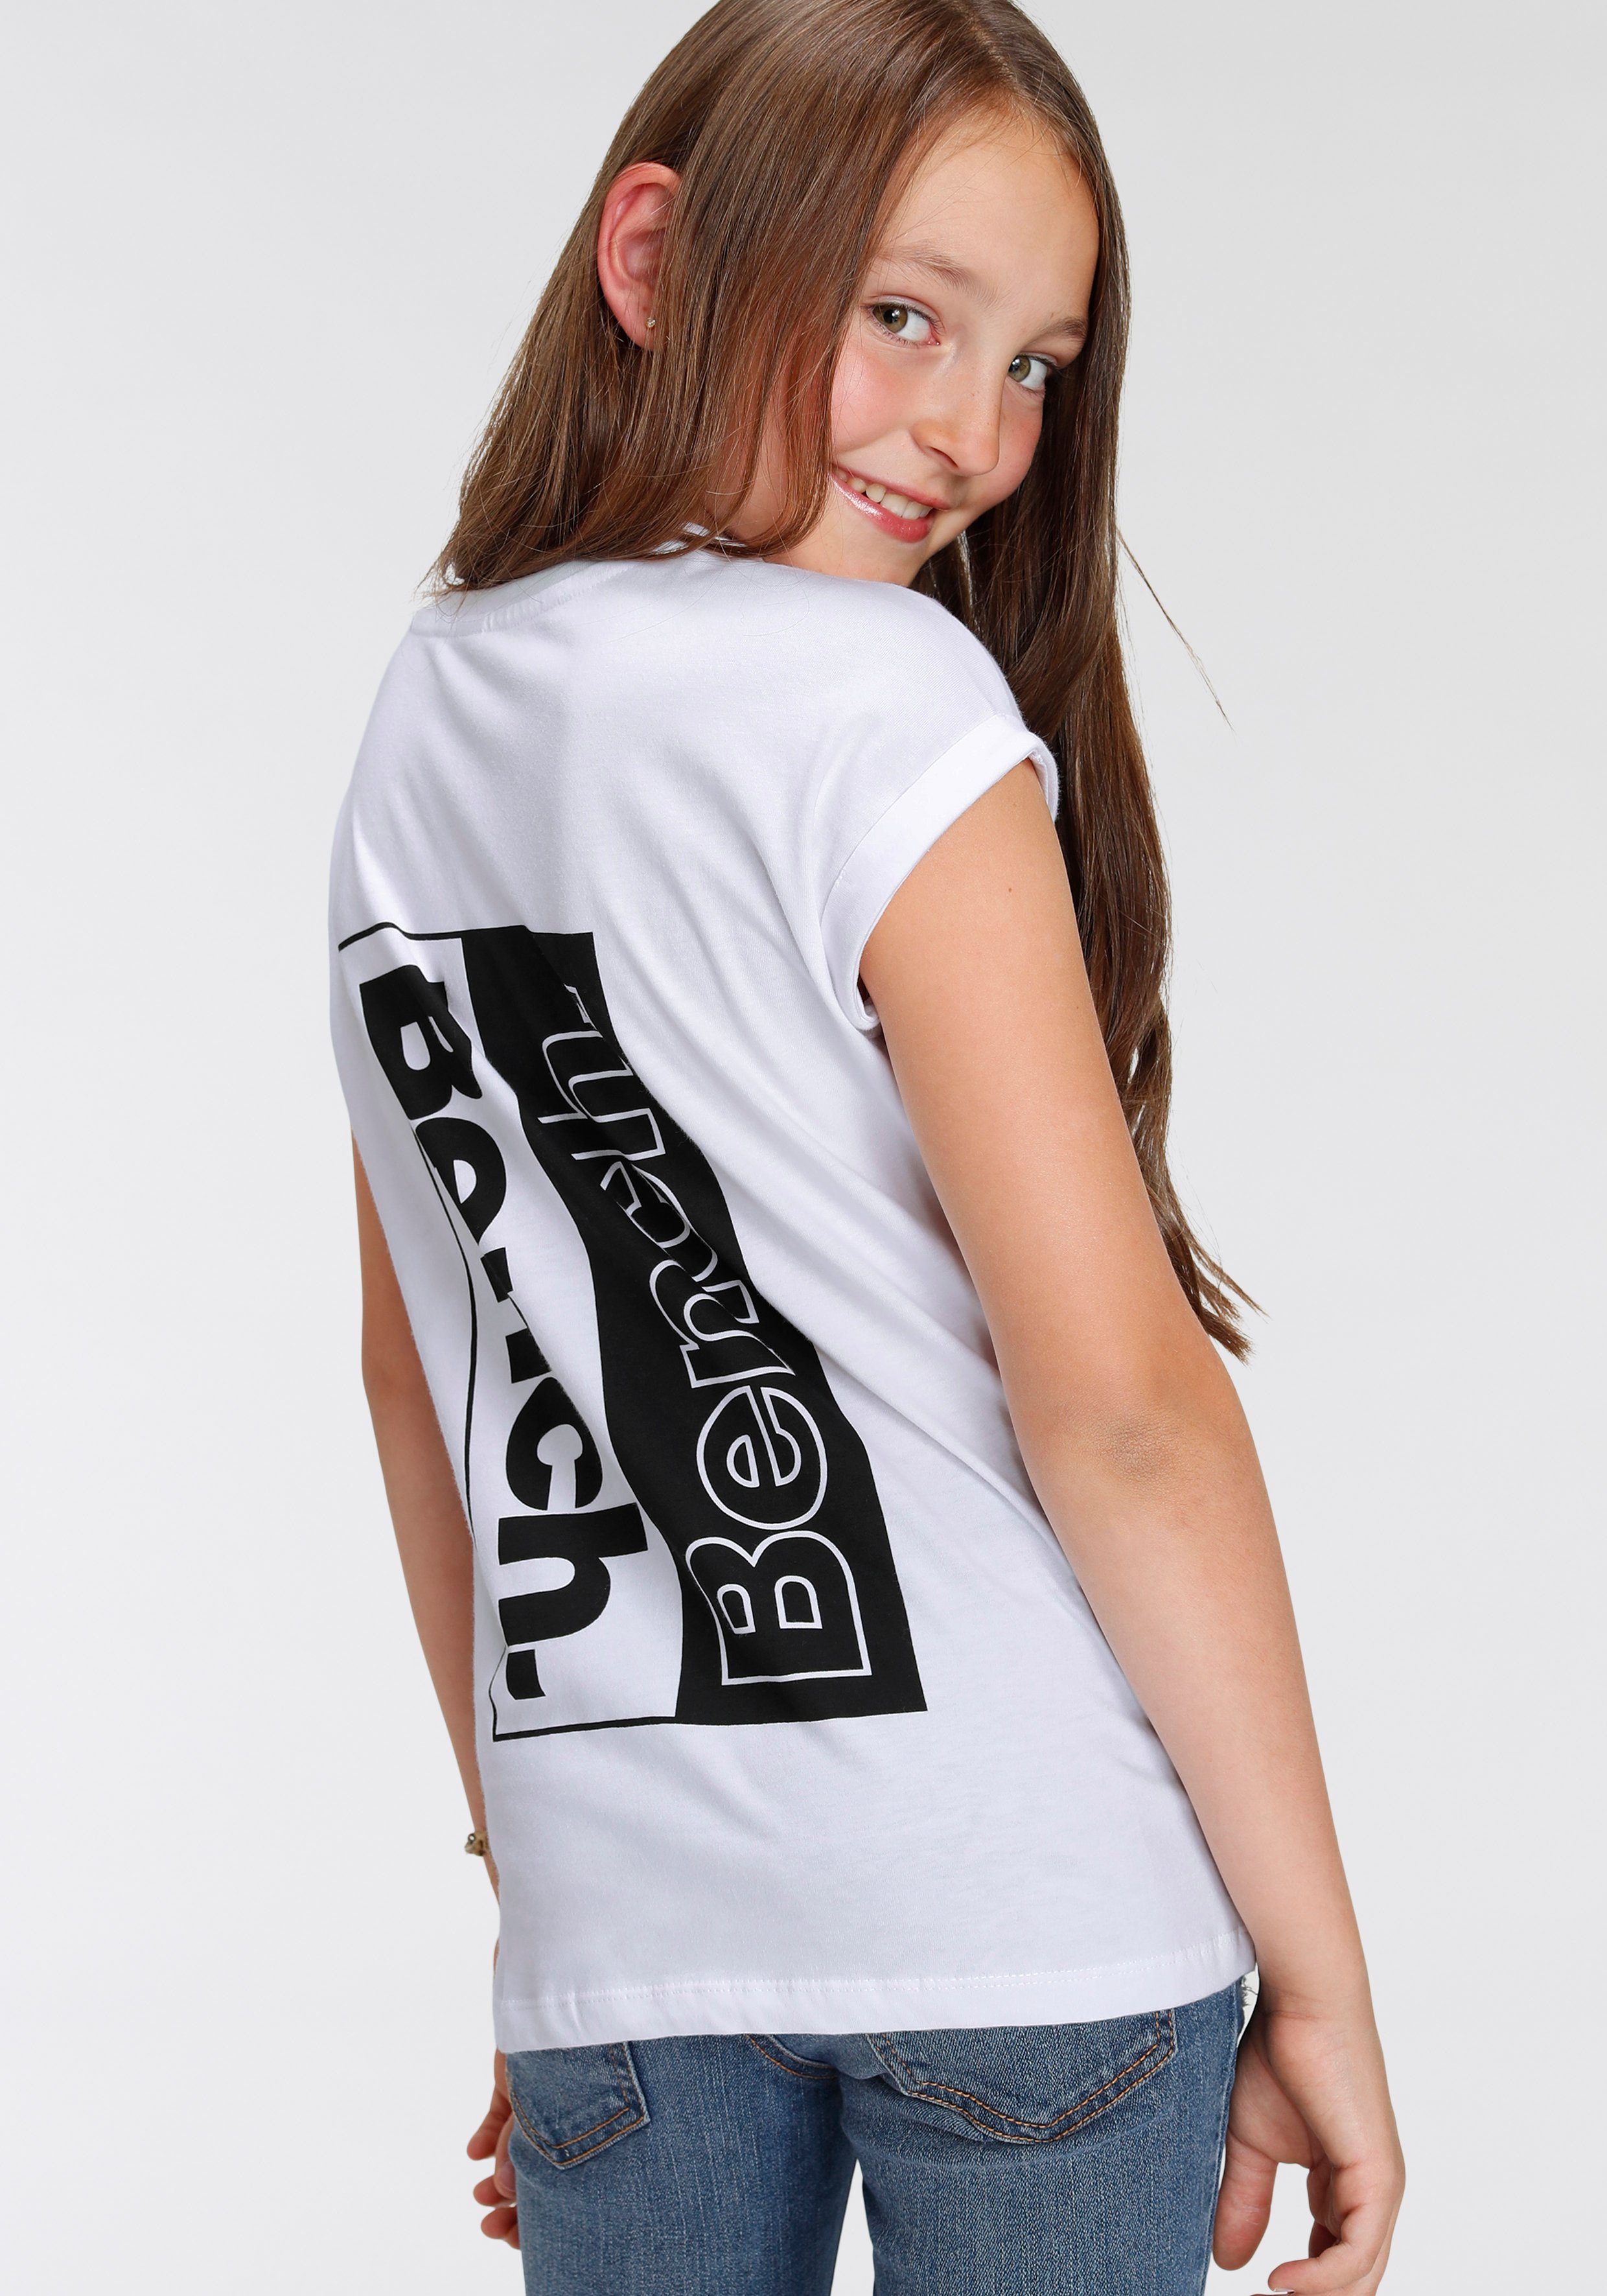 Bench. T-Shirt mit Logo Rückendruck